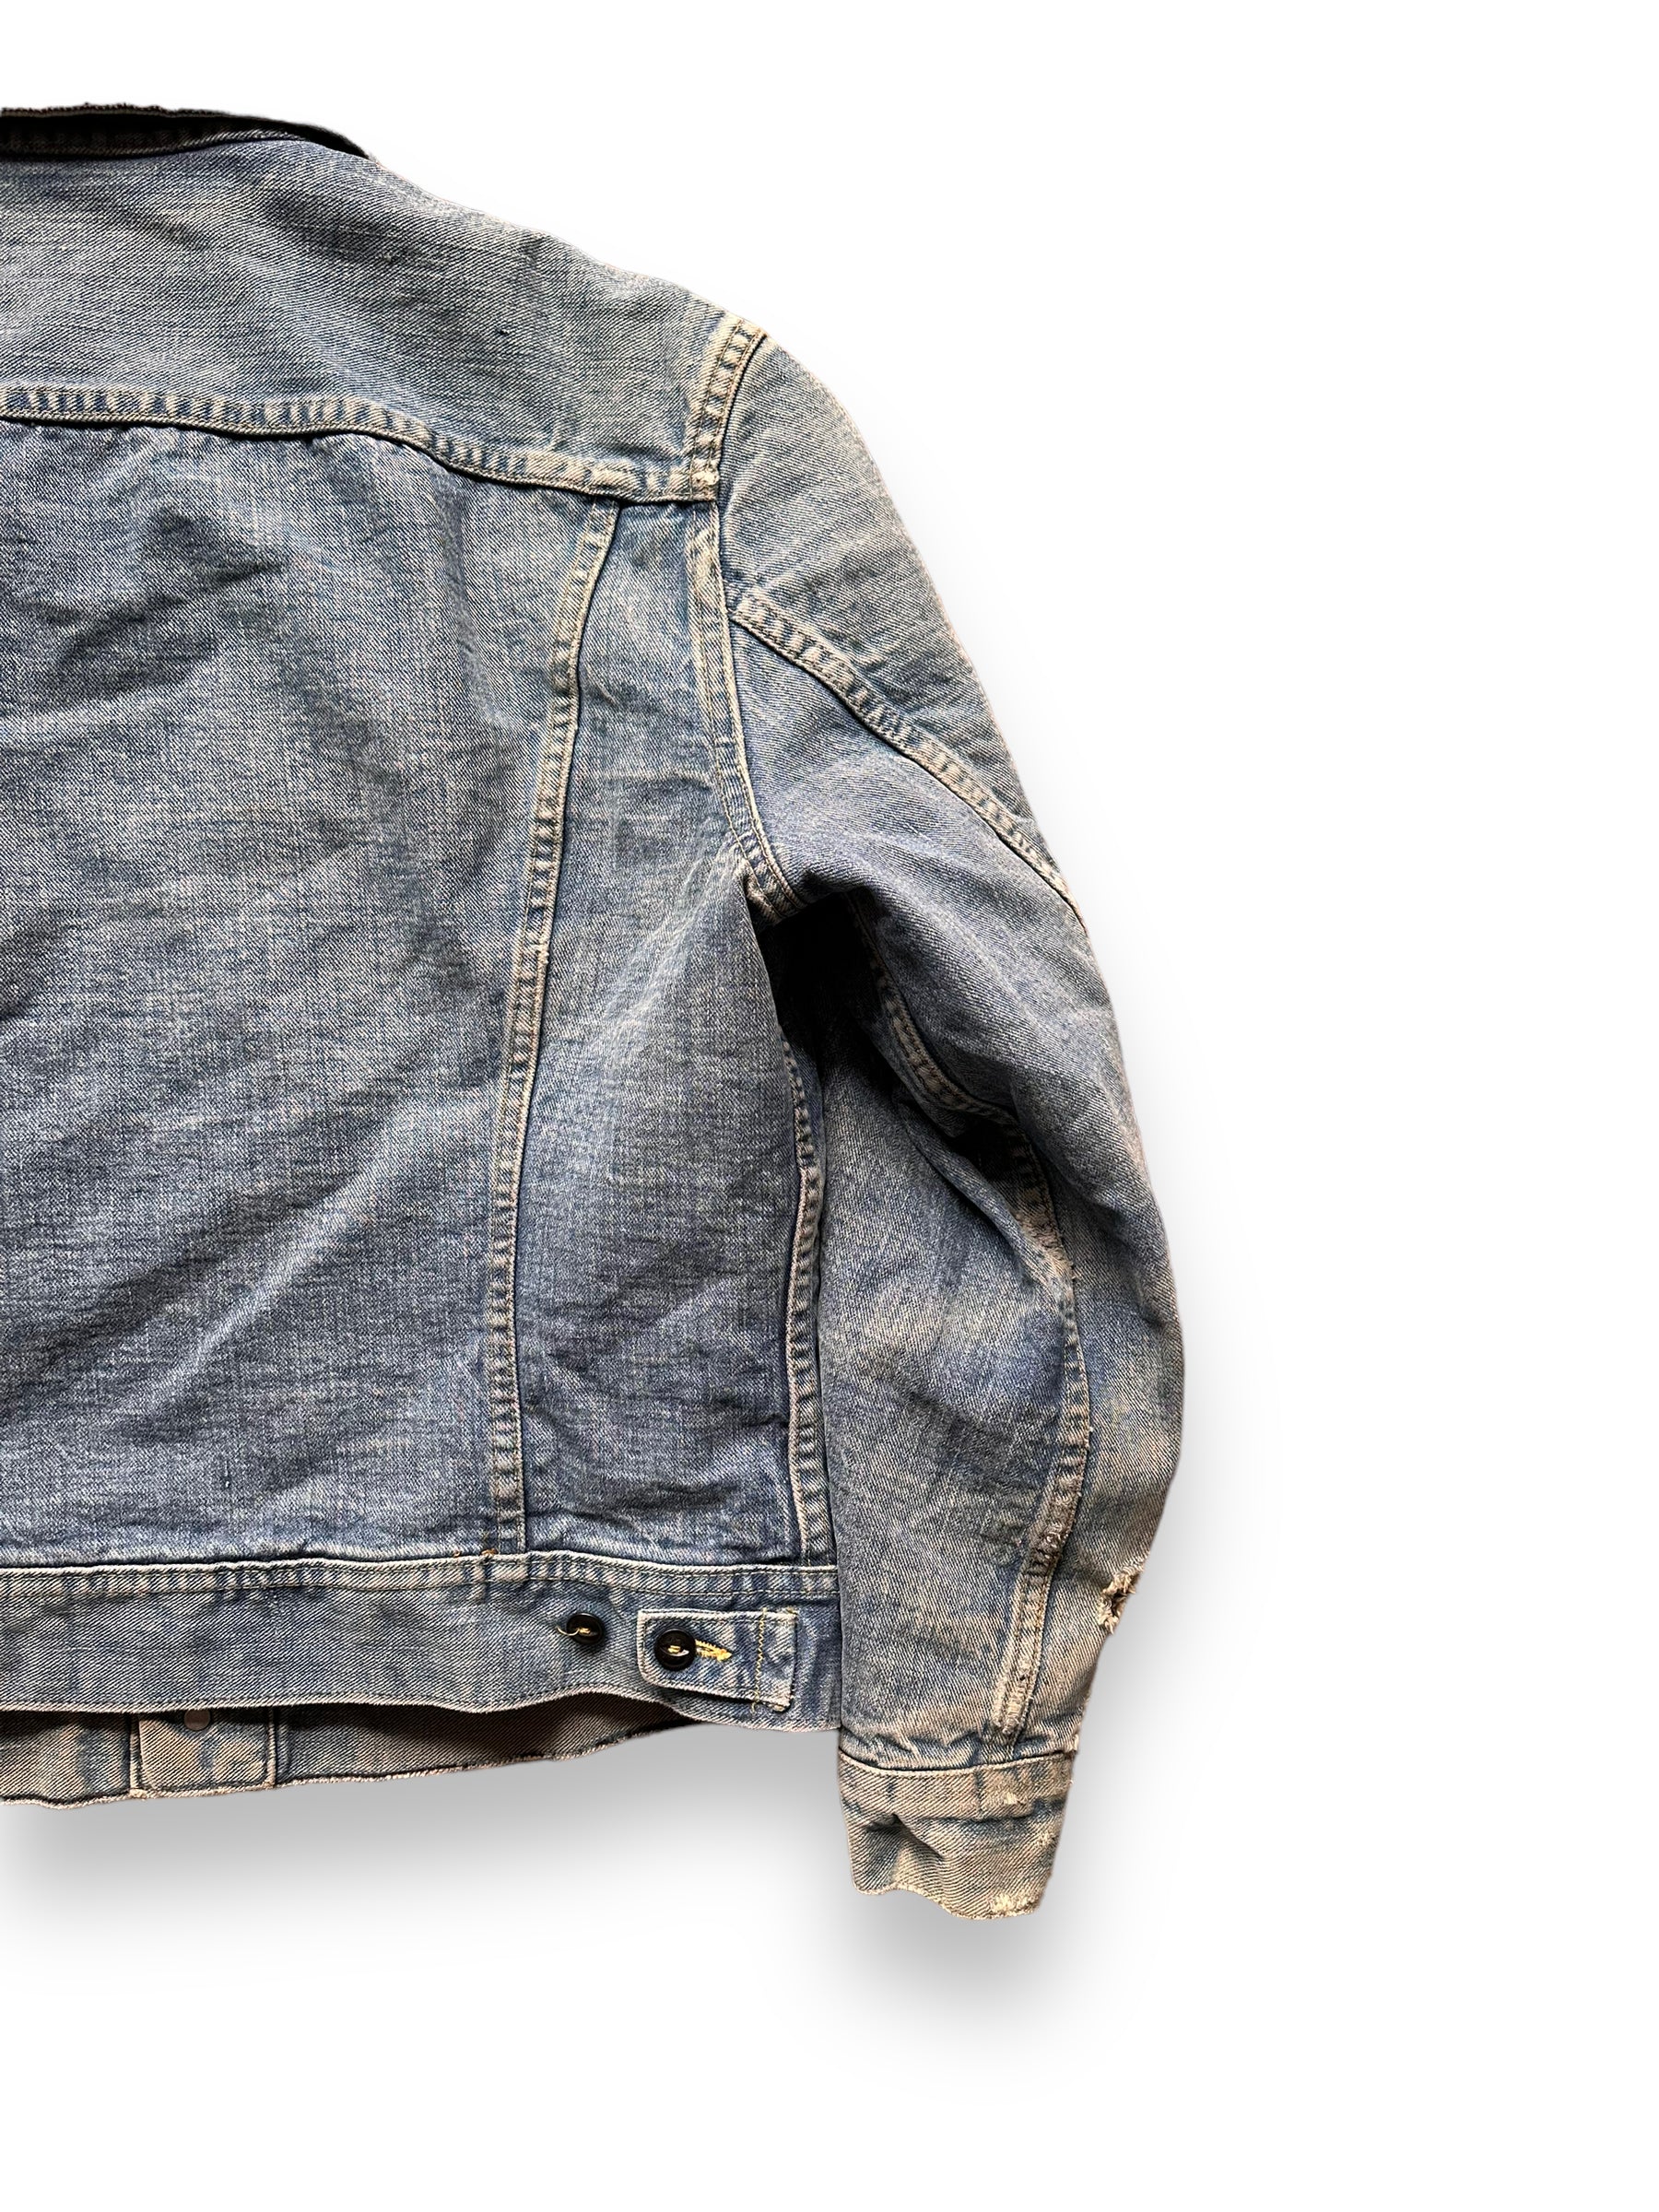 Right Rear View on Vintage Blanket Lined Lee Storm Rider Denim Jacket SZ L| Barn Owl Vintage | Seattle True Vintage Workwear